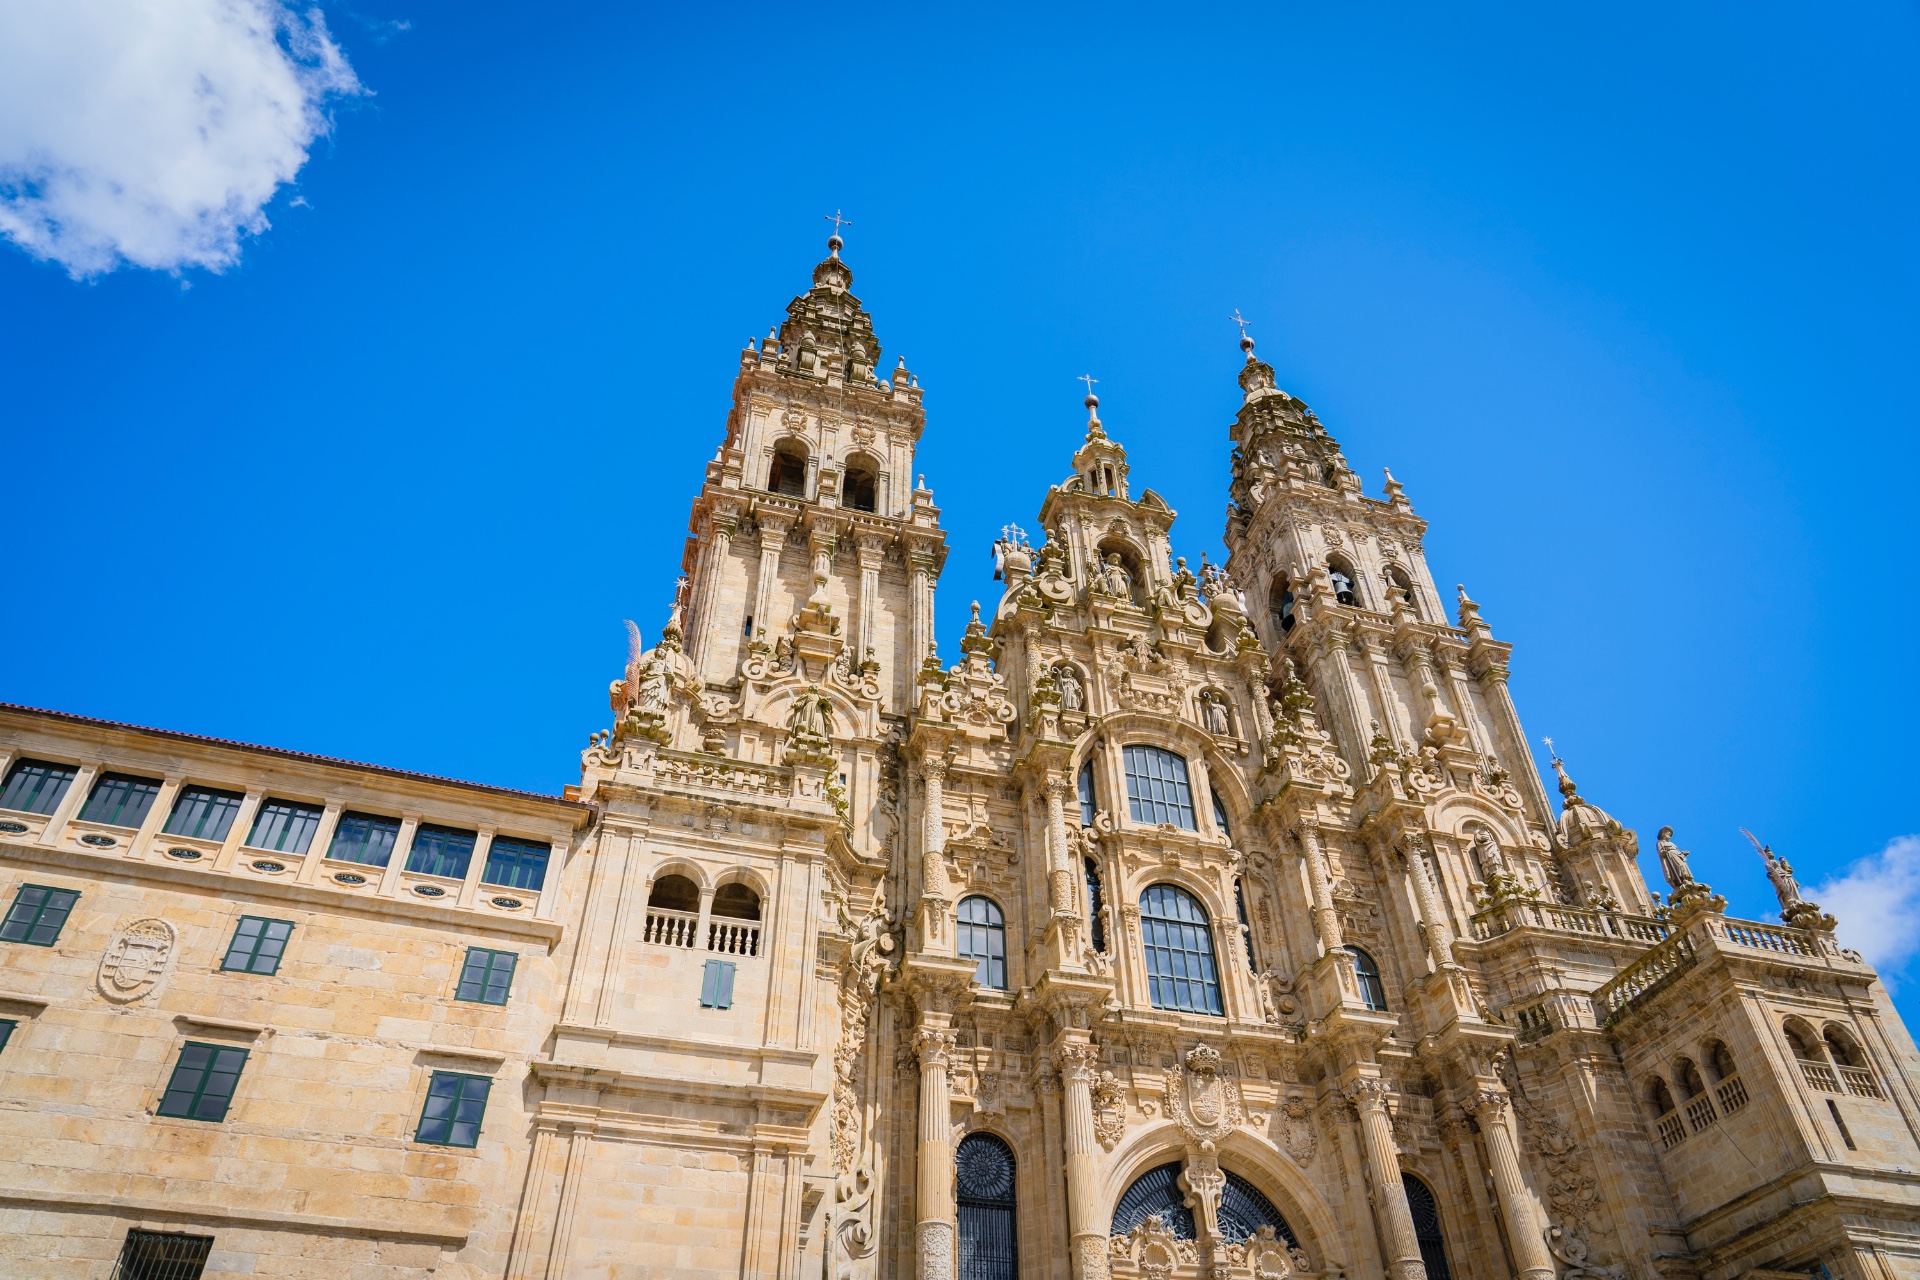 Spain Road Trip: Madrid, León & Santiago de Compostela - 8 Days